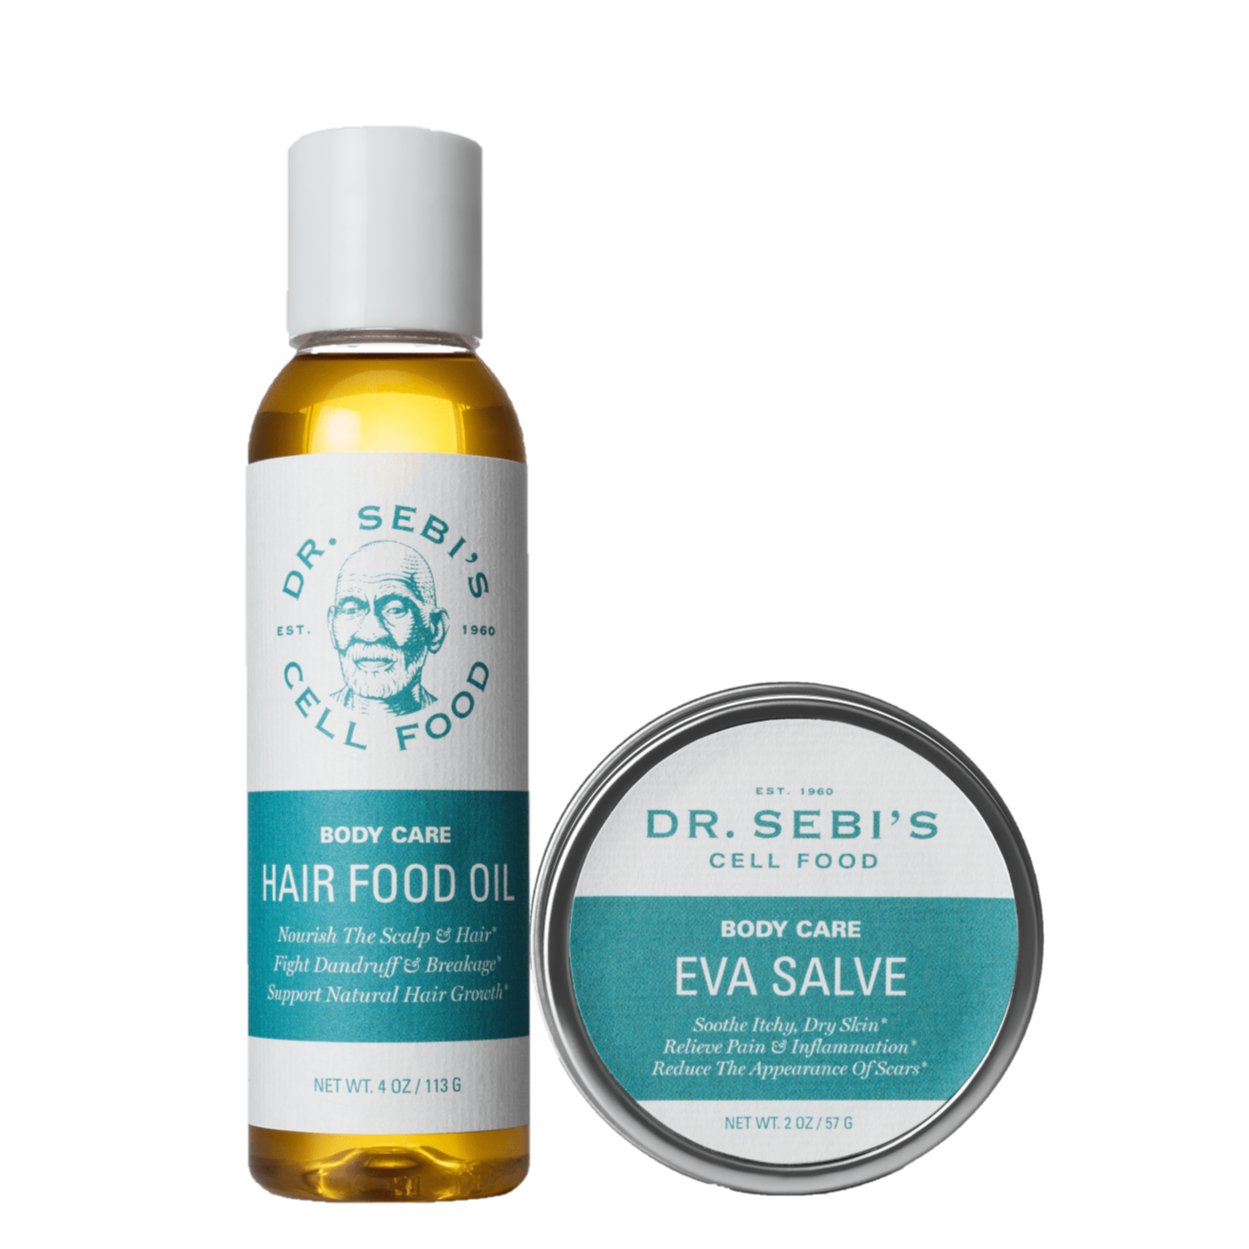 Dr. Sebi Healthy Hair & Skin Kit - Batana Oil Hair Food Oil Bottle